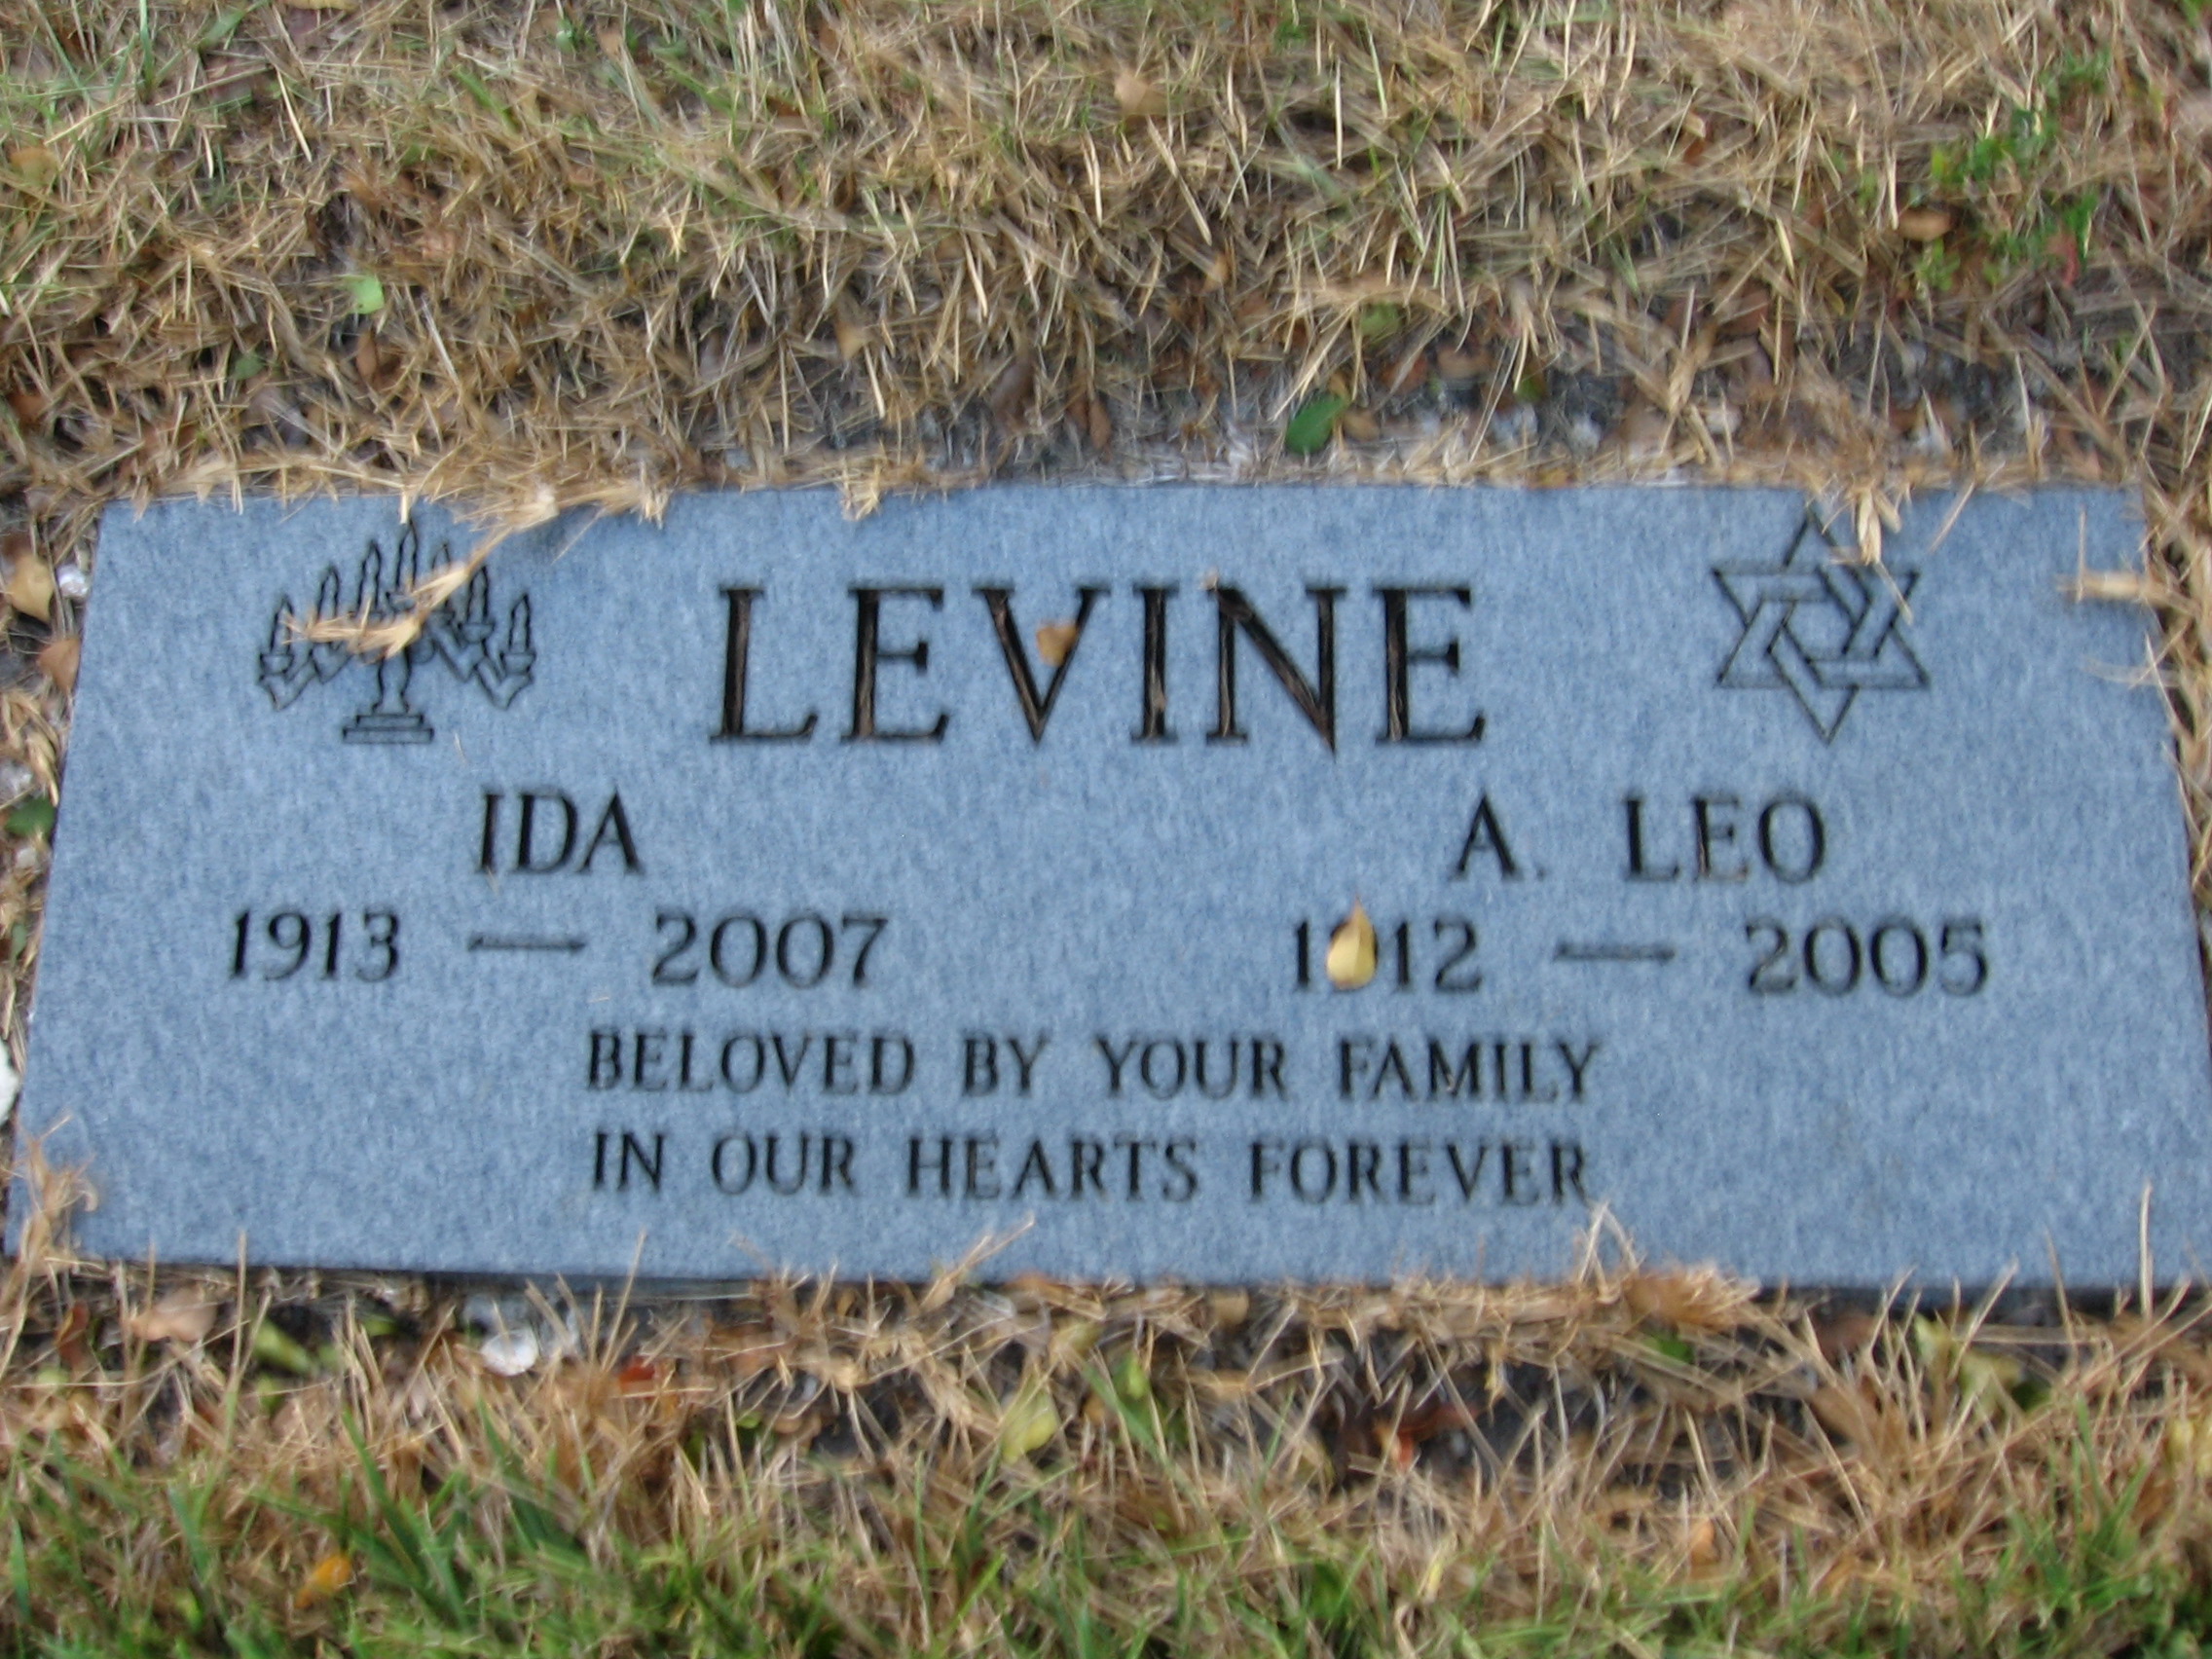 A Leo Levine